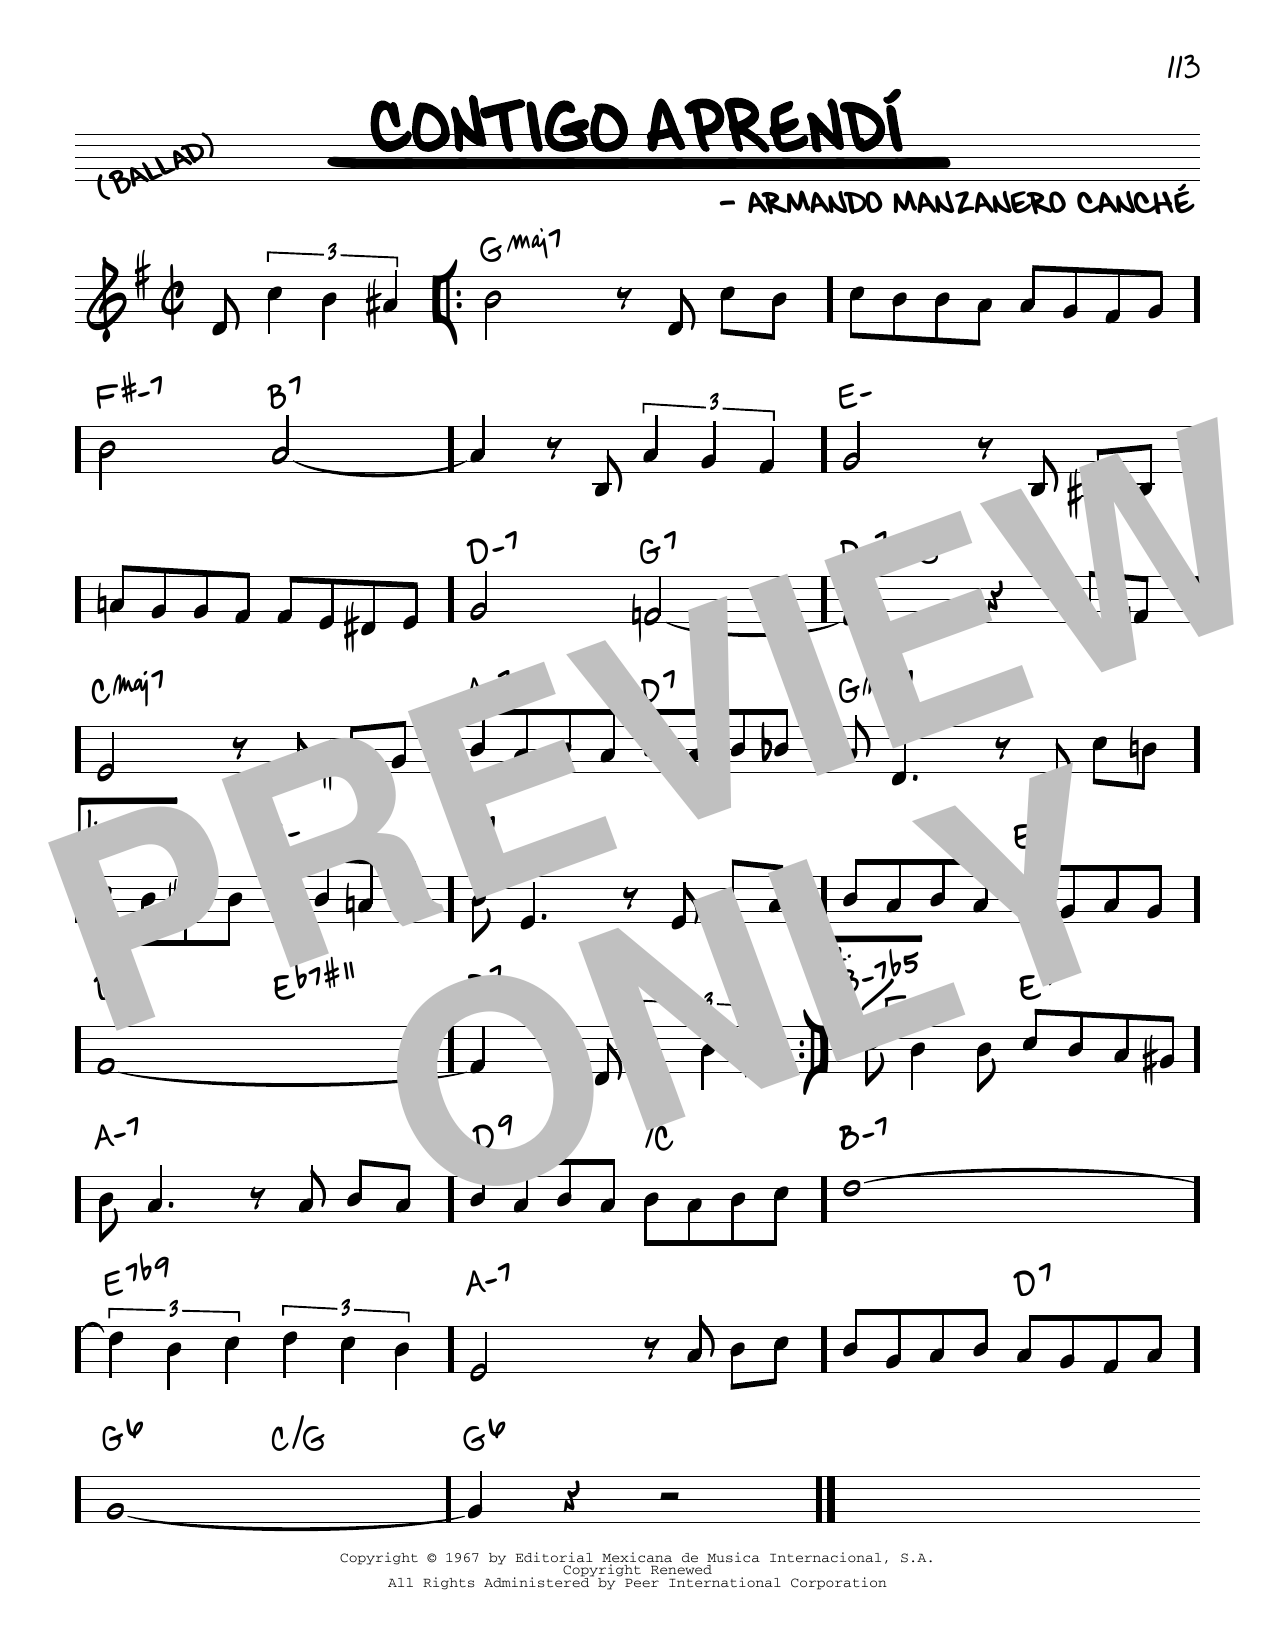 Armando Manzanero Canche Contigo Aprendi sheet music preview music notes and score for Piano, Vocal & Guitar Chords (Right-Hand Melody) including 4 page(s)